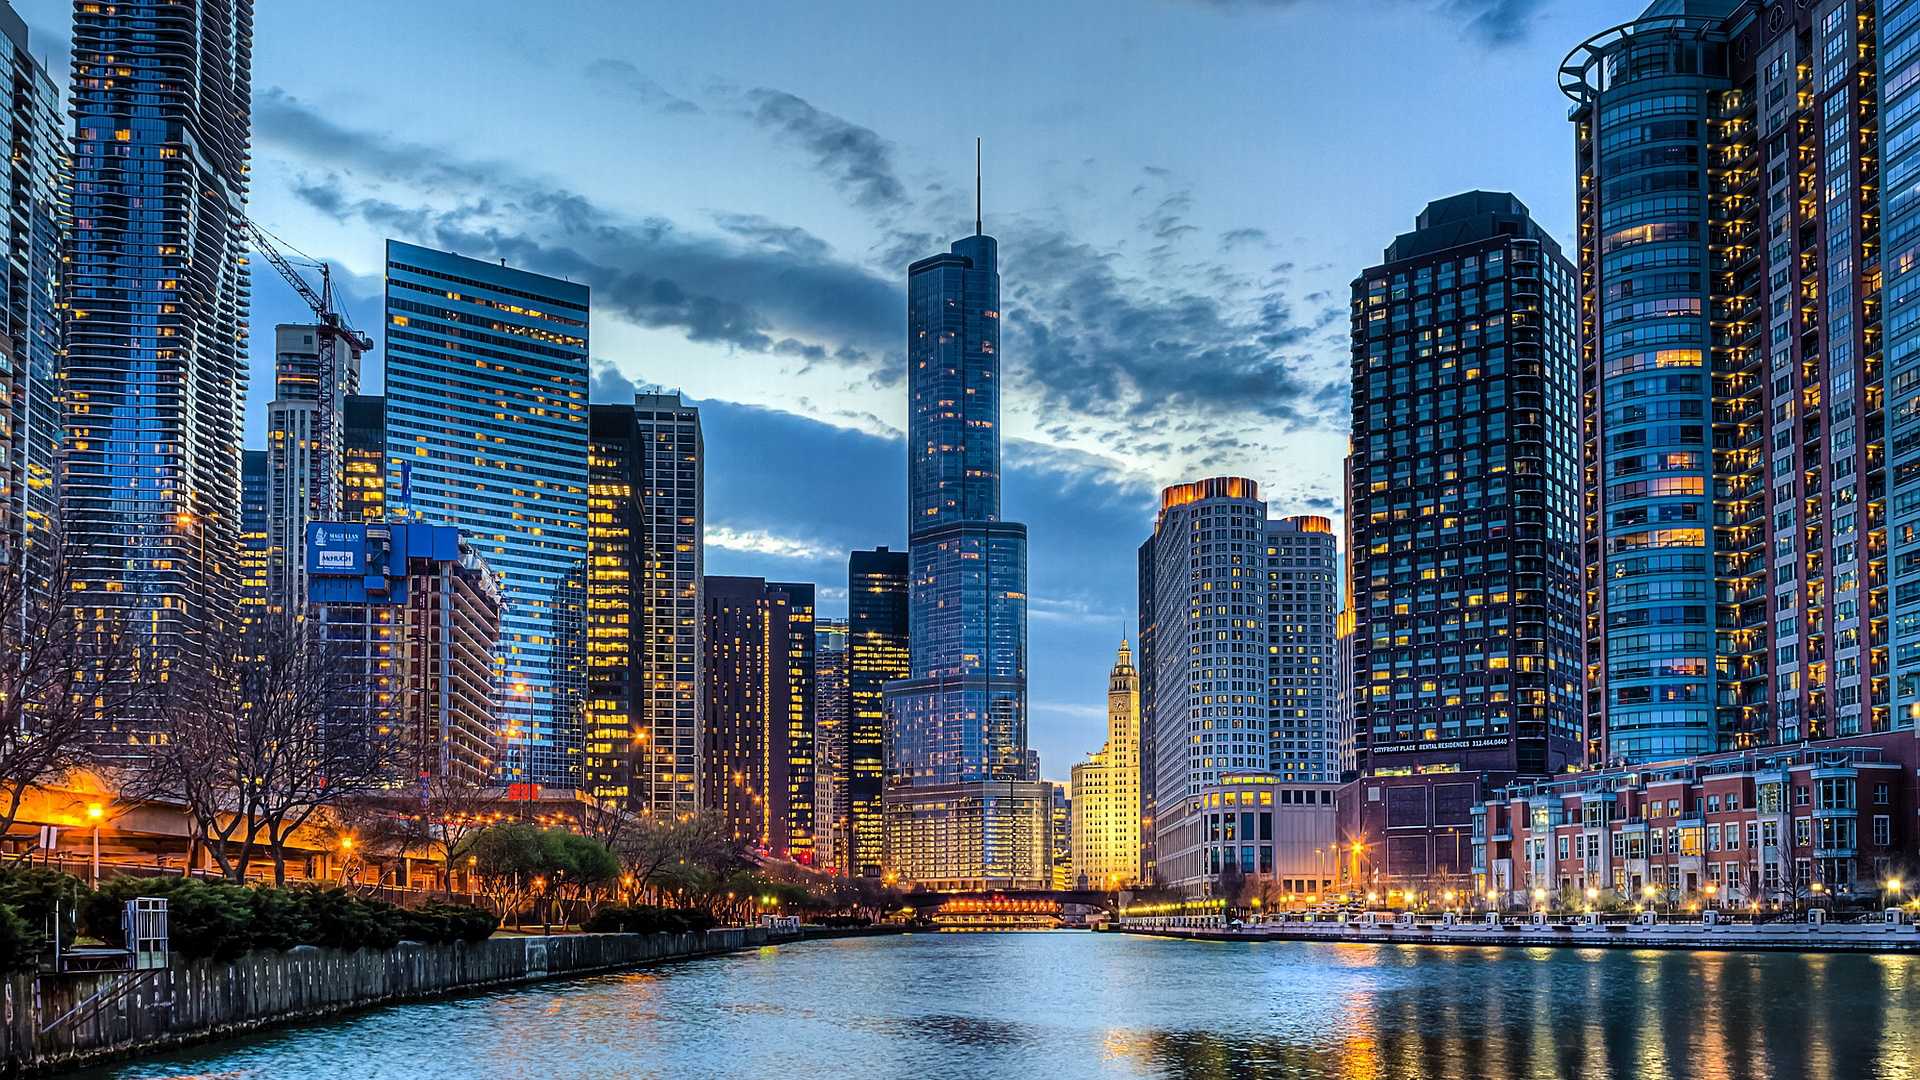 Chicago Skyline Wallpaper Photo High Resolution For Mobile Phones